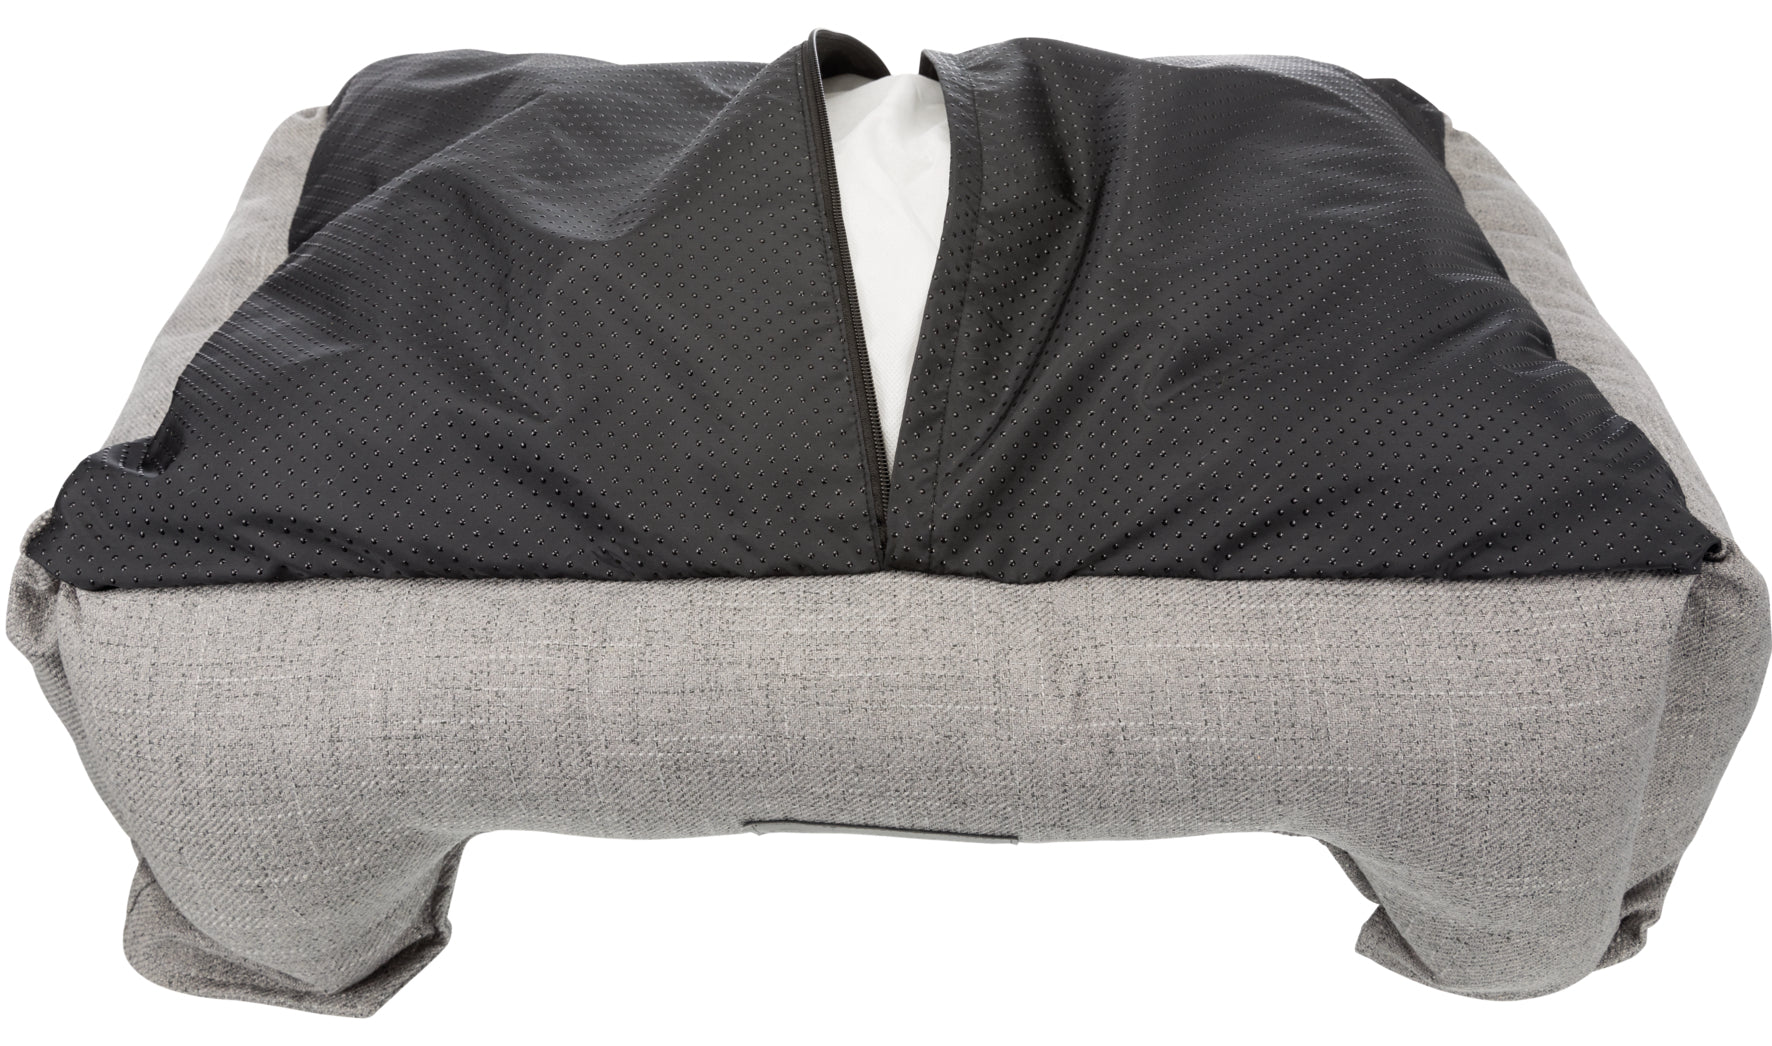 Trixie Talis Lounger Bed, 70 x 100 cm (27 x 39 inch), Grey - Petsgool Online